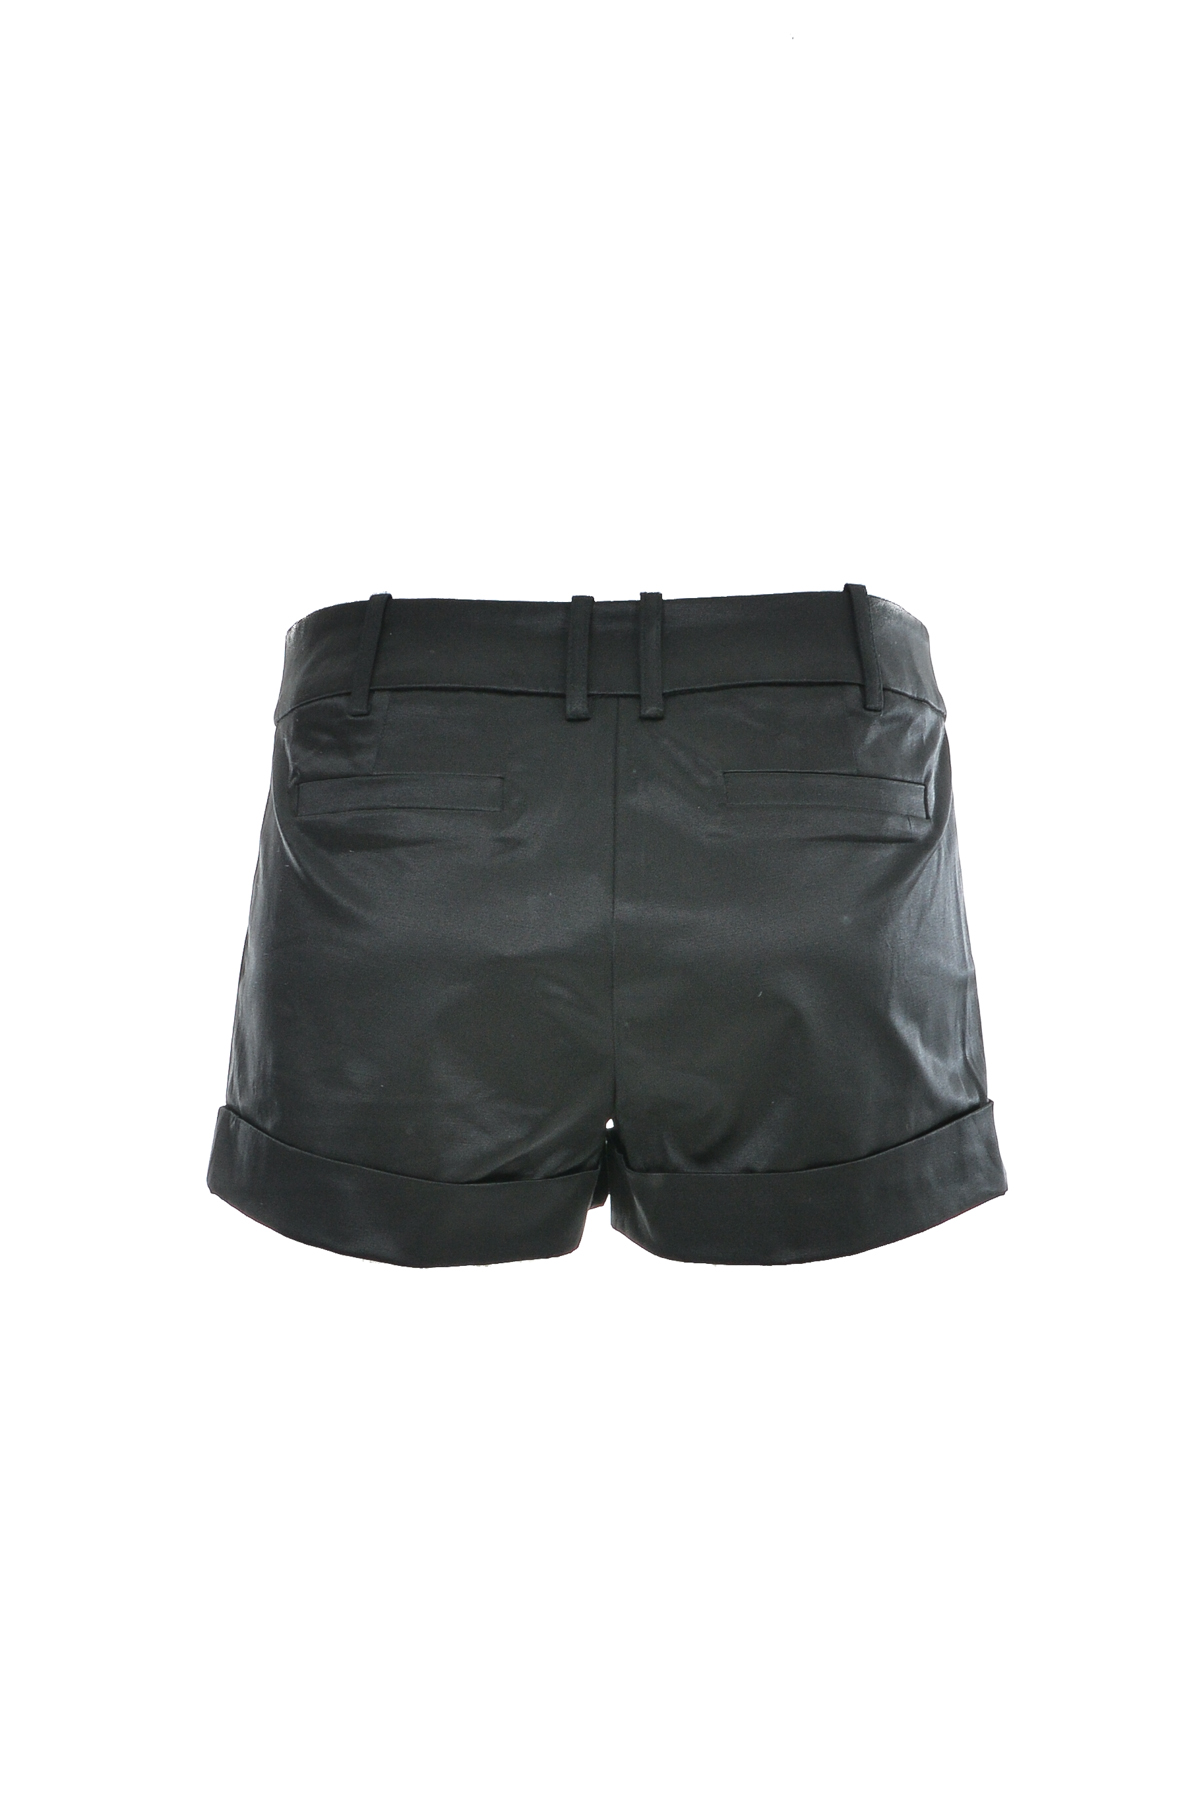 Female shorts - Bebe - 1